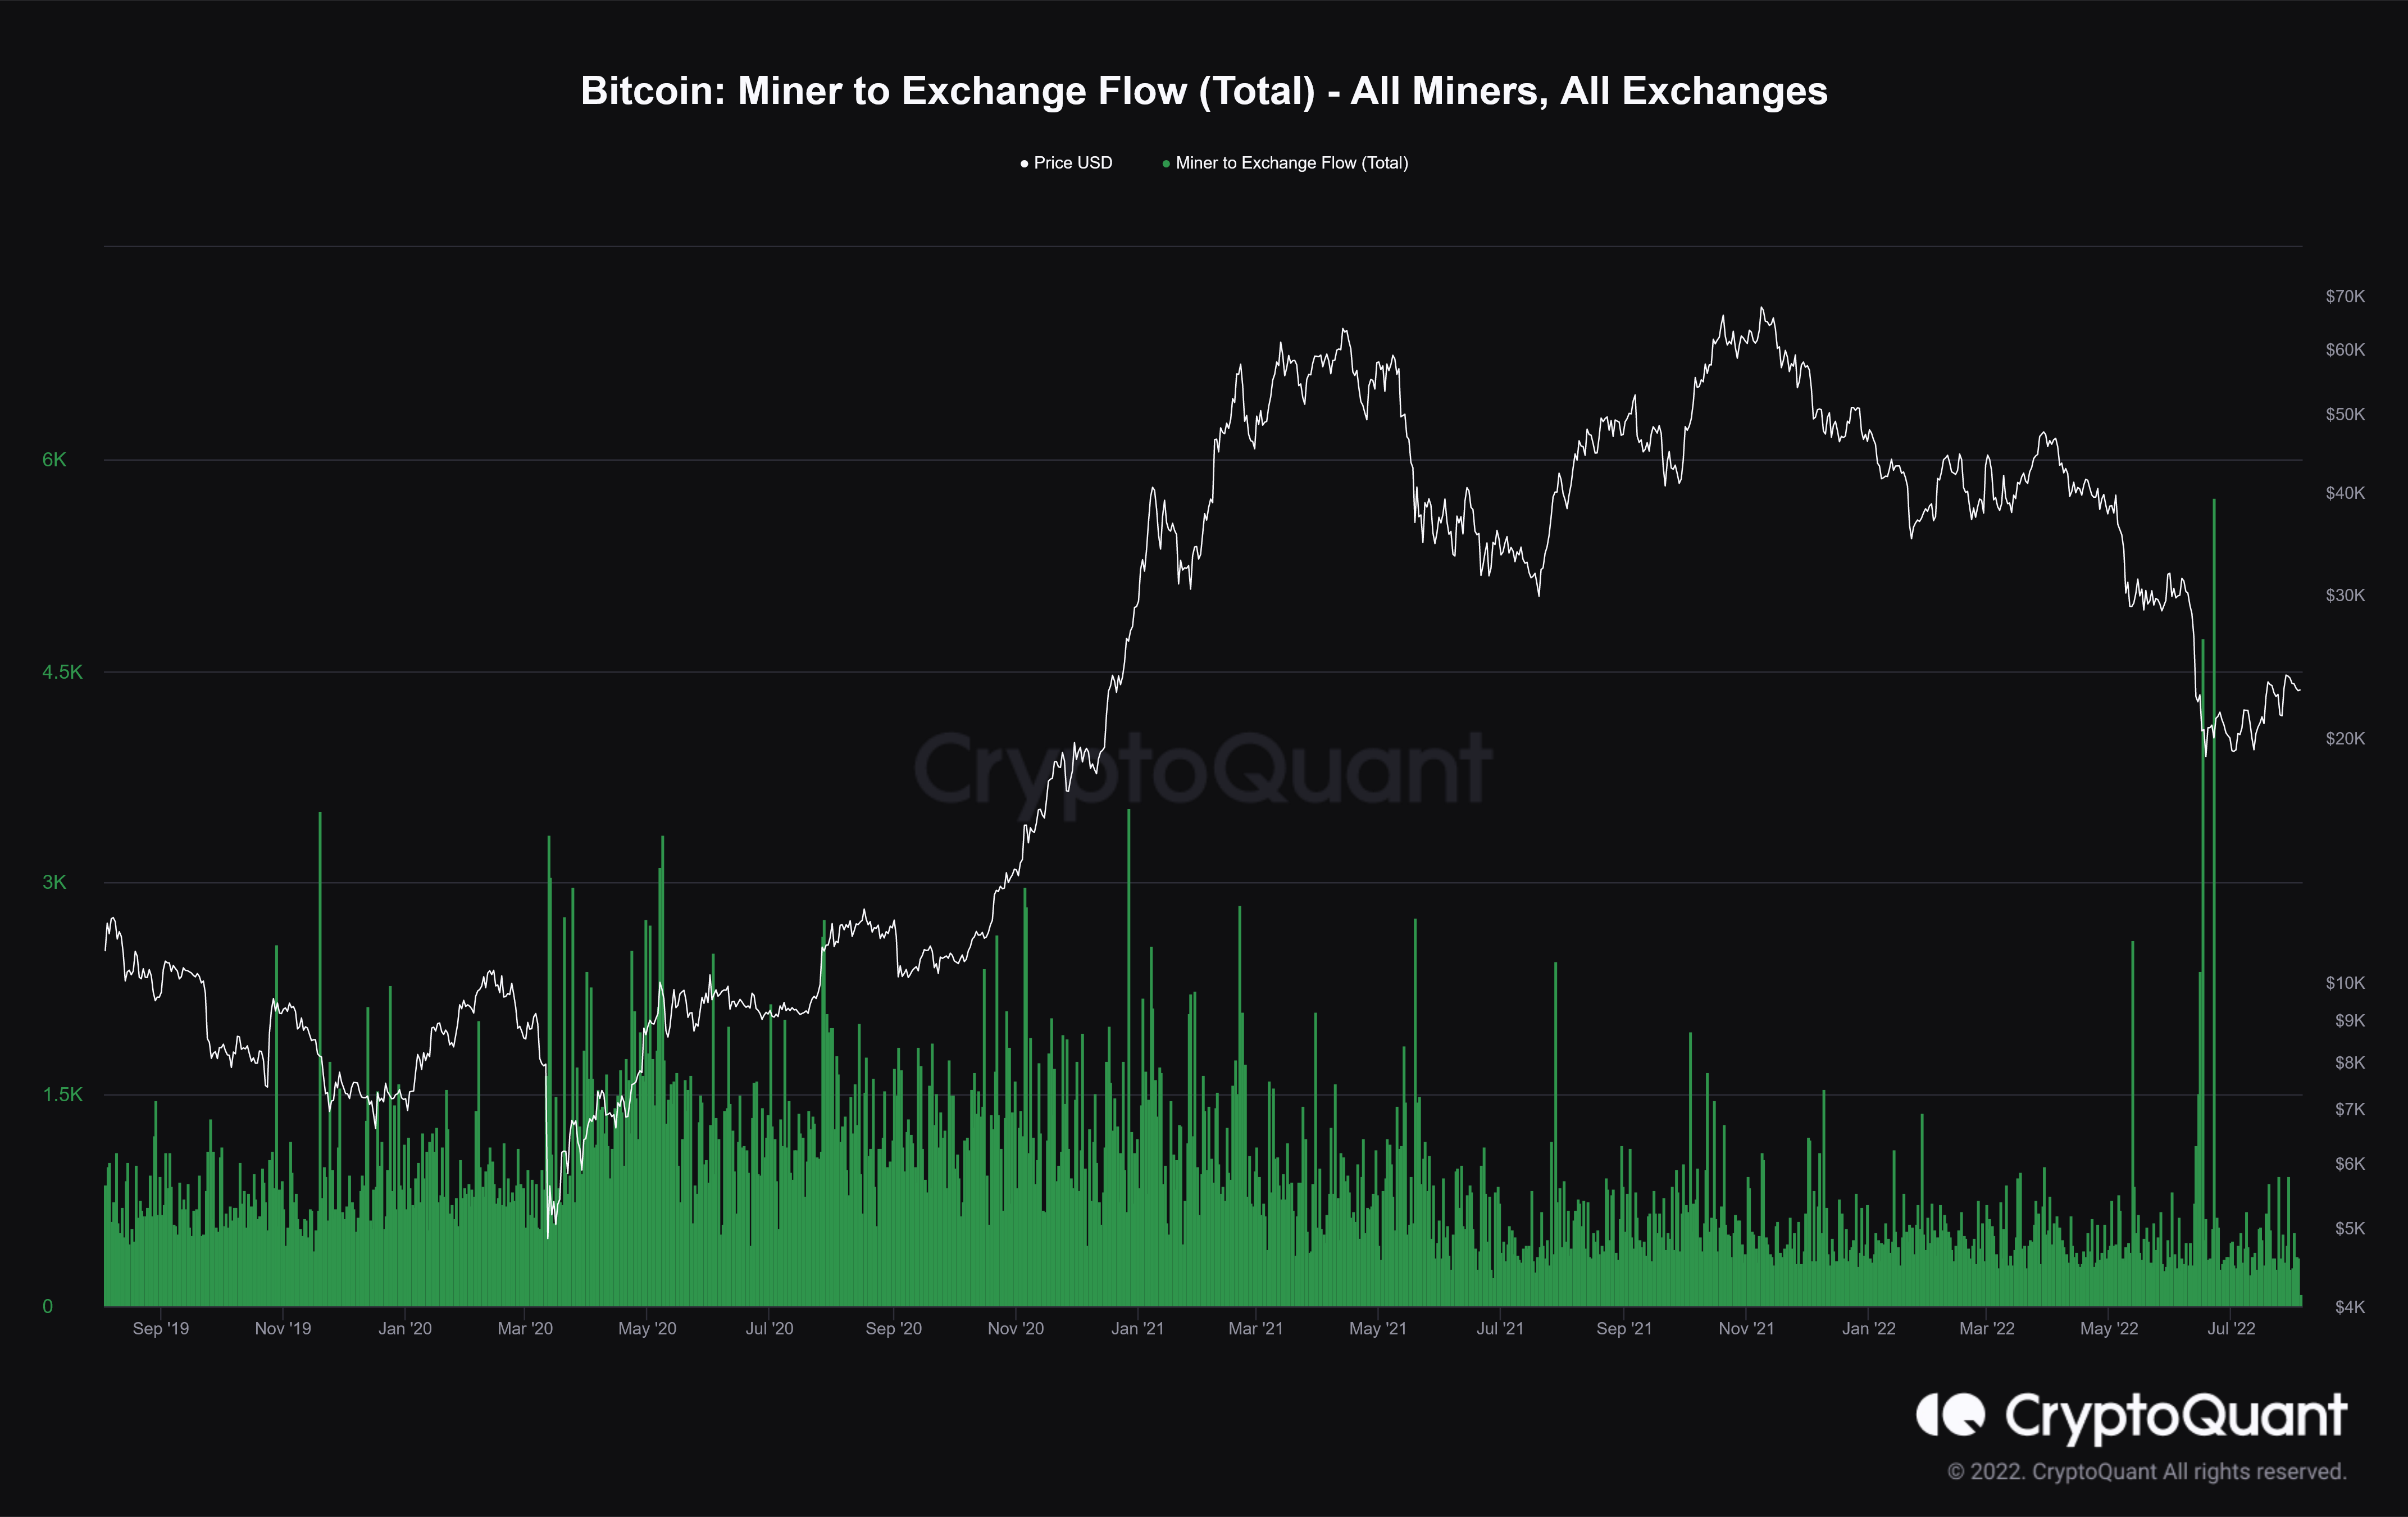 mineur bitcoin to exchange